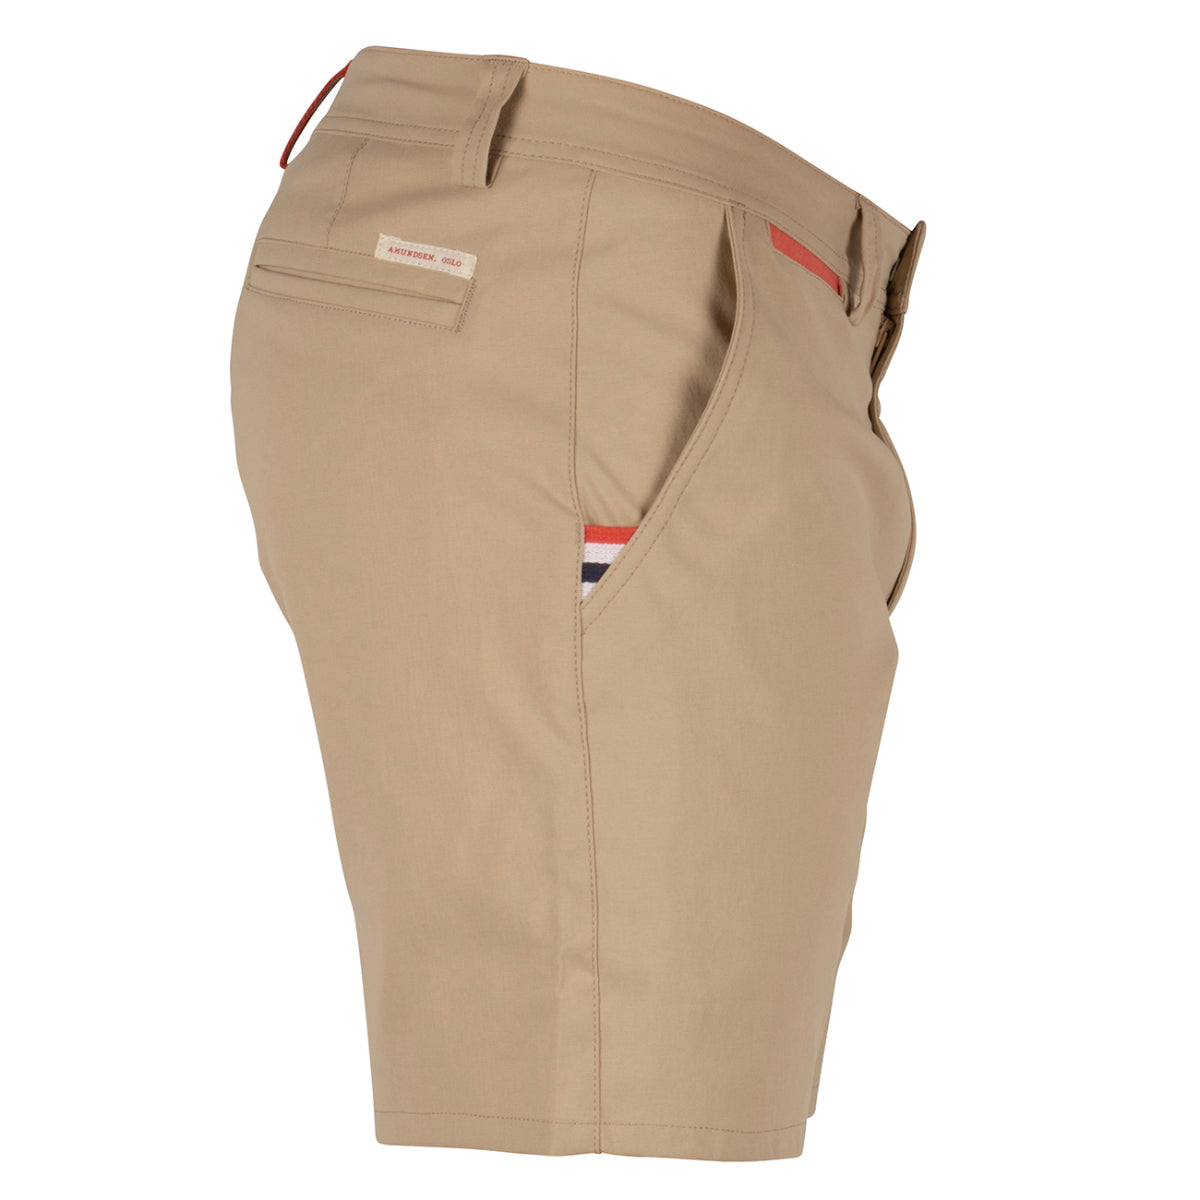 Amundsen Sports - Men's 8 Incher Deck Shorts - Desert